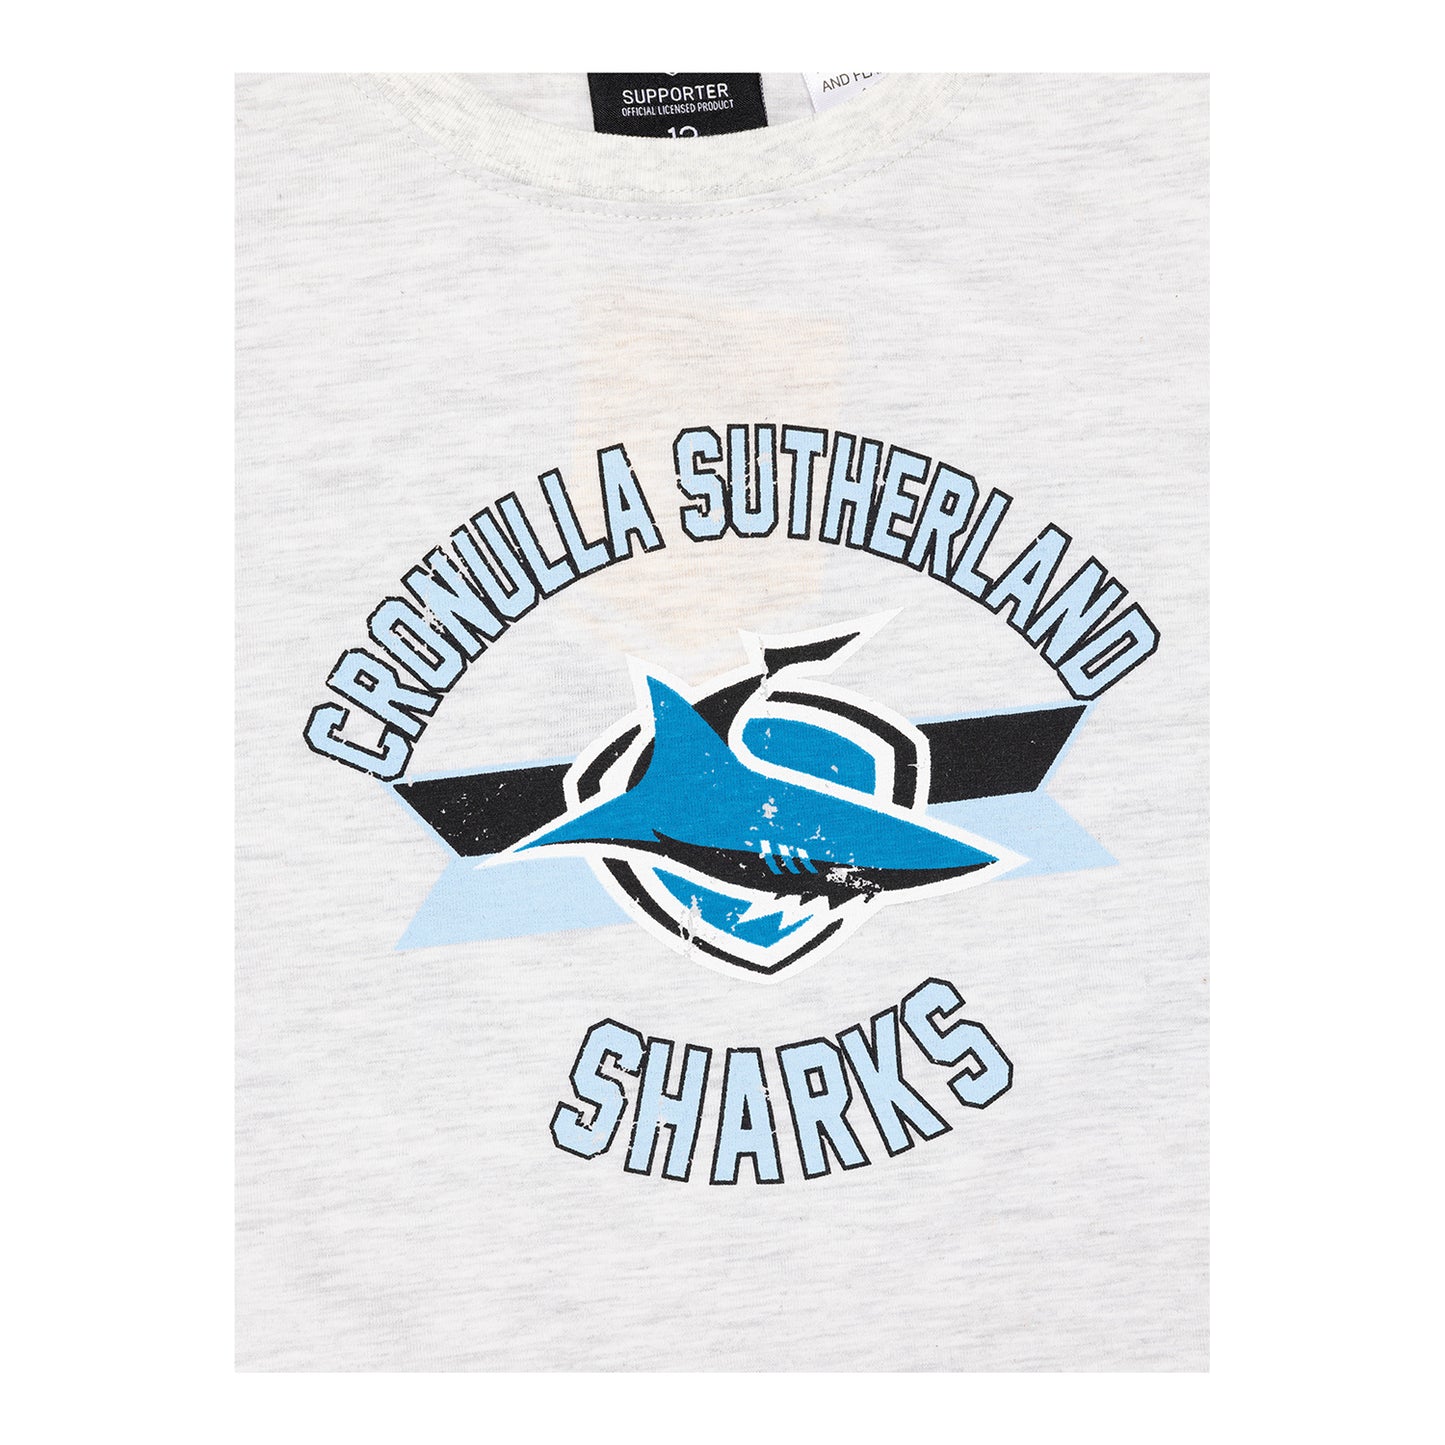 Cronulla-Sutherland Sharks Toddler Check PJ Set